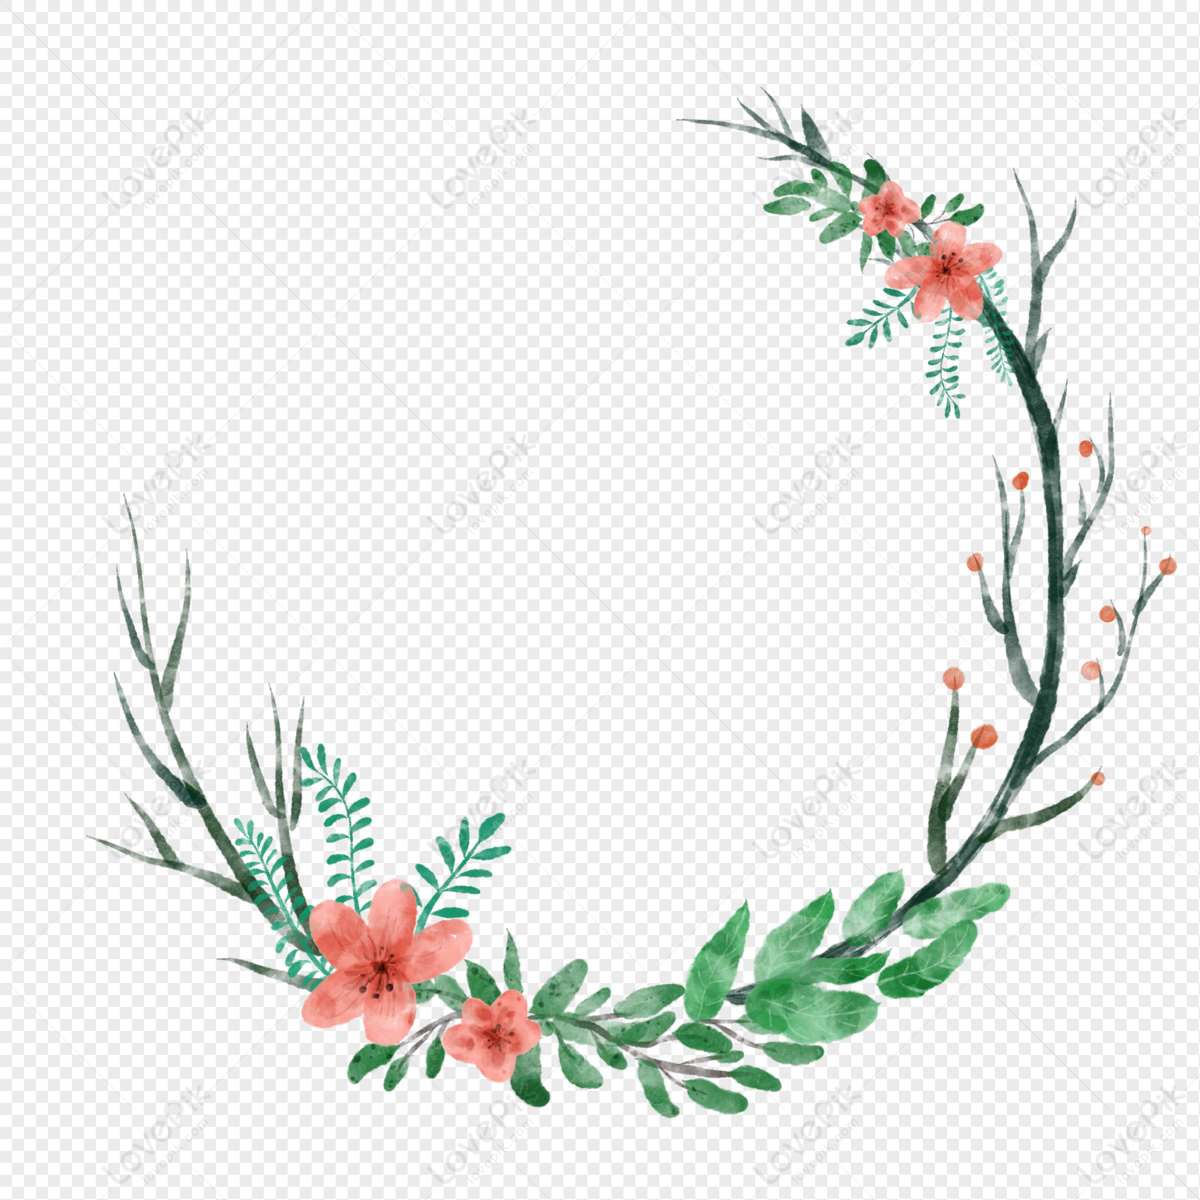 Summer Green Leaf Flowers Border Decoration Background PNG Transparent And  Clipart Image For Free Download - Lovepik | 401535266